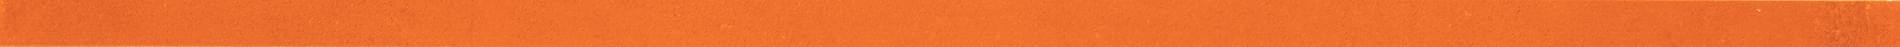 Flaviker Backstage Orange Matita Ret 2x80